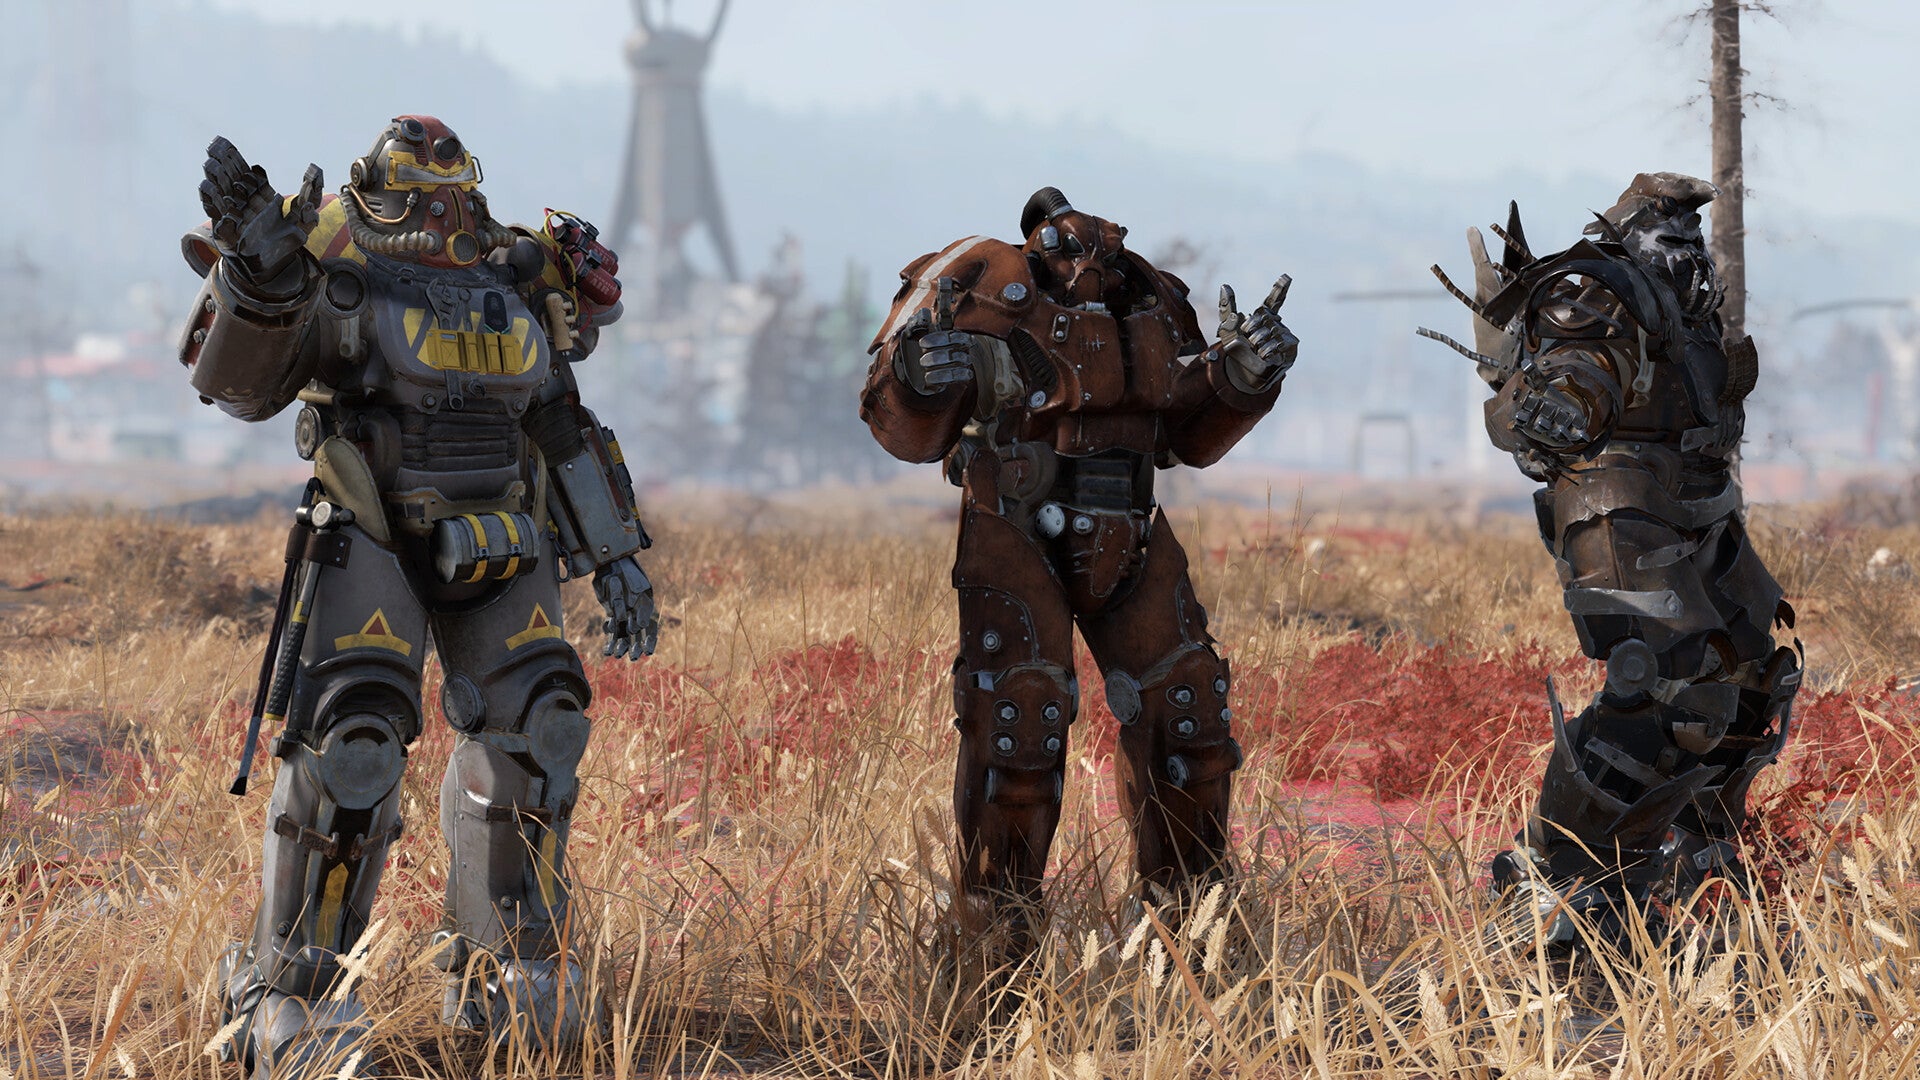 Fallout 76 follows Cyberpunk 2077's success and boasts 17 million players across its network.